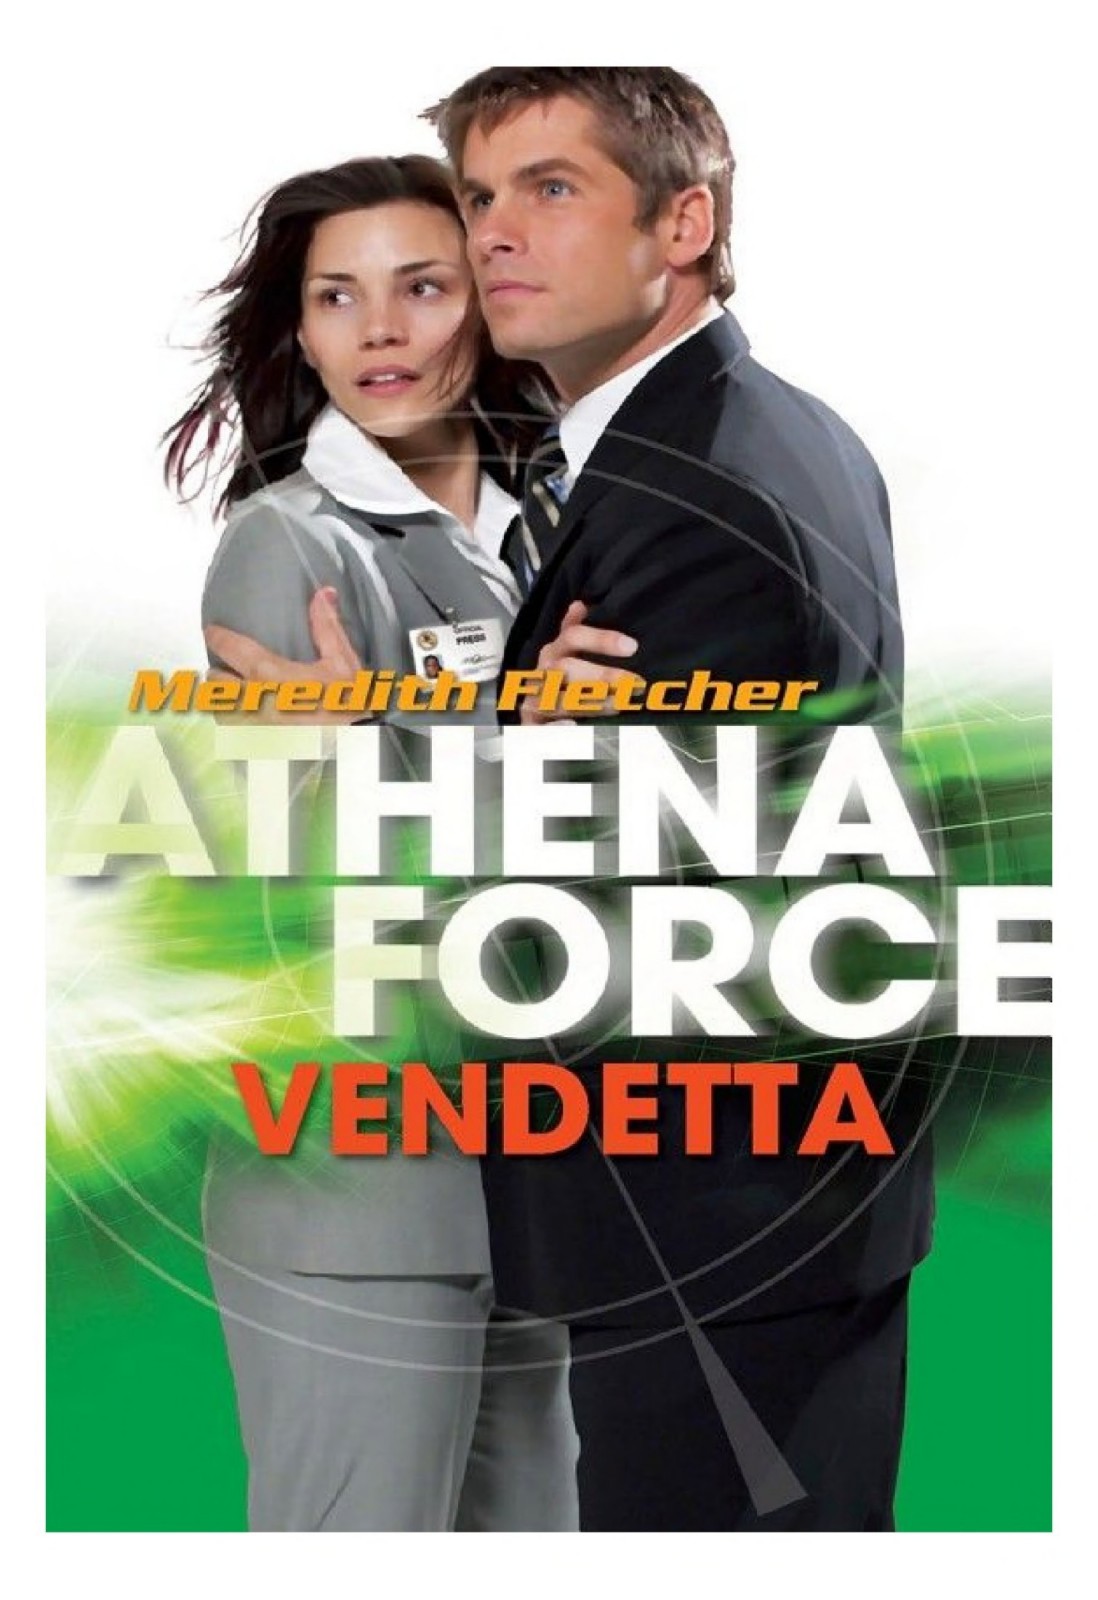 Vendetta (Athena Force #21)